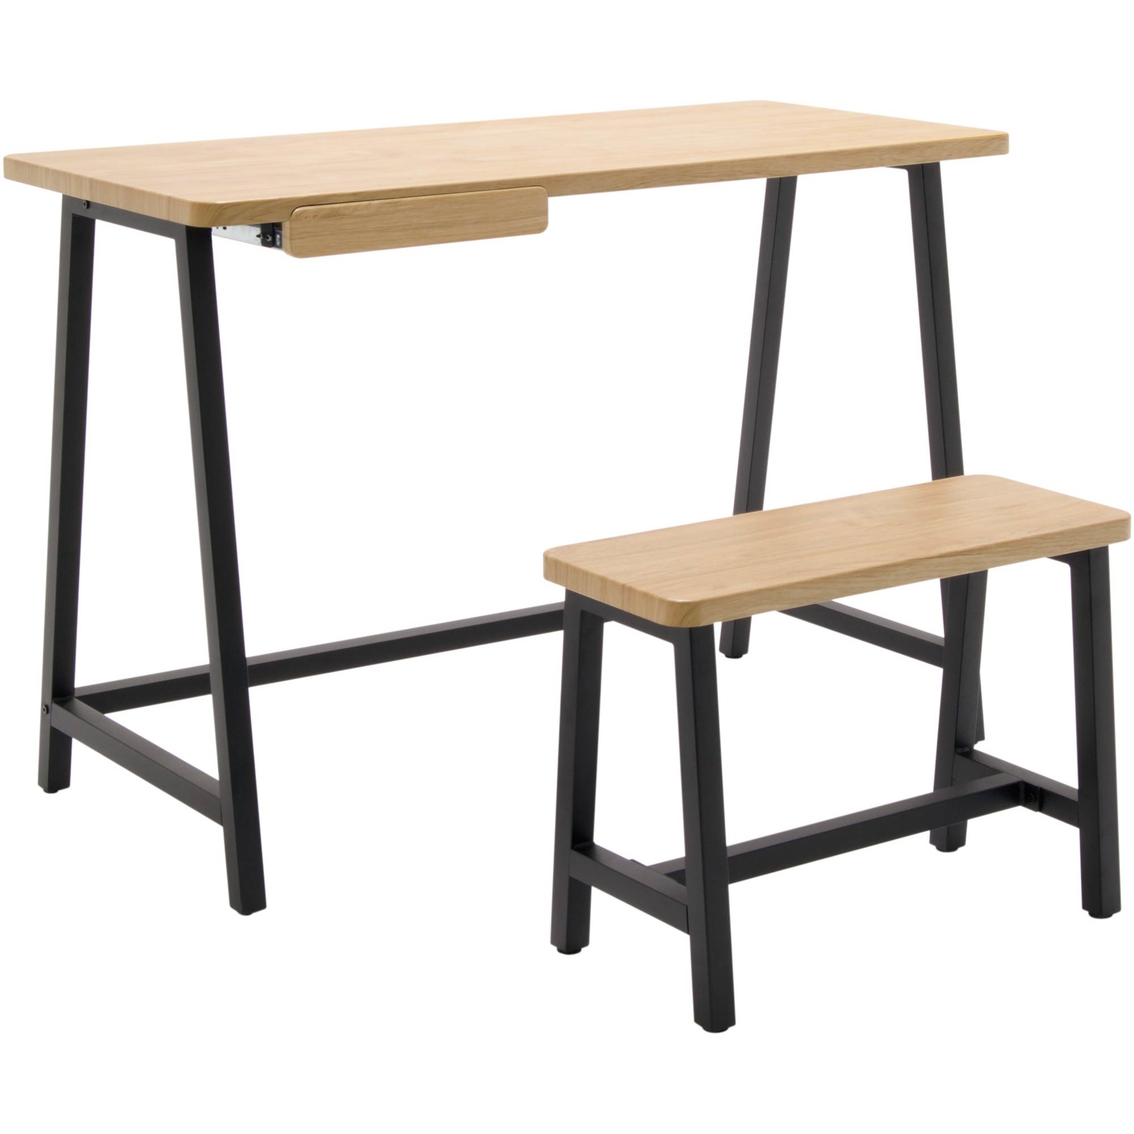 Calico Designs Ashwood Homeroom Desk and Bench - Image 1 of 4